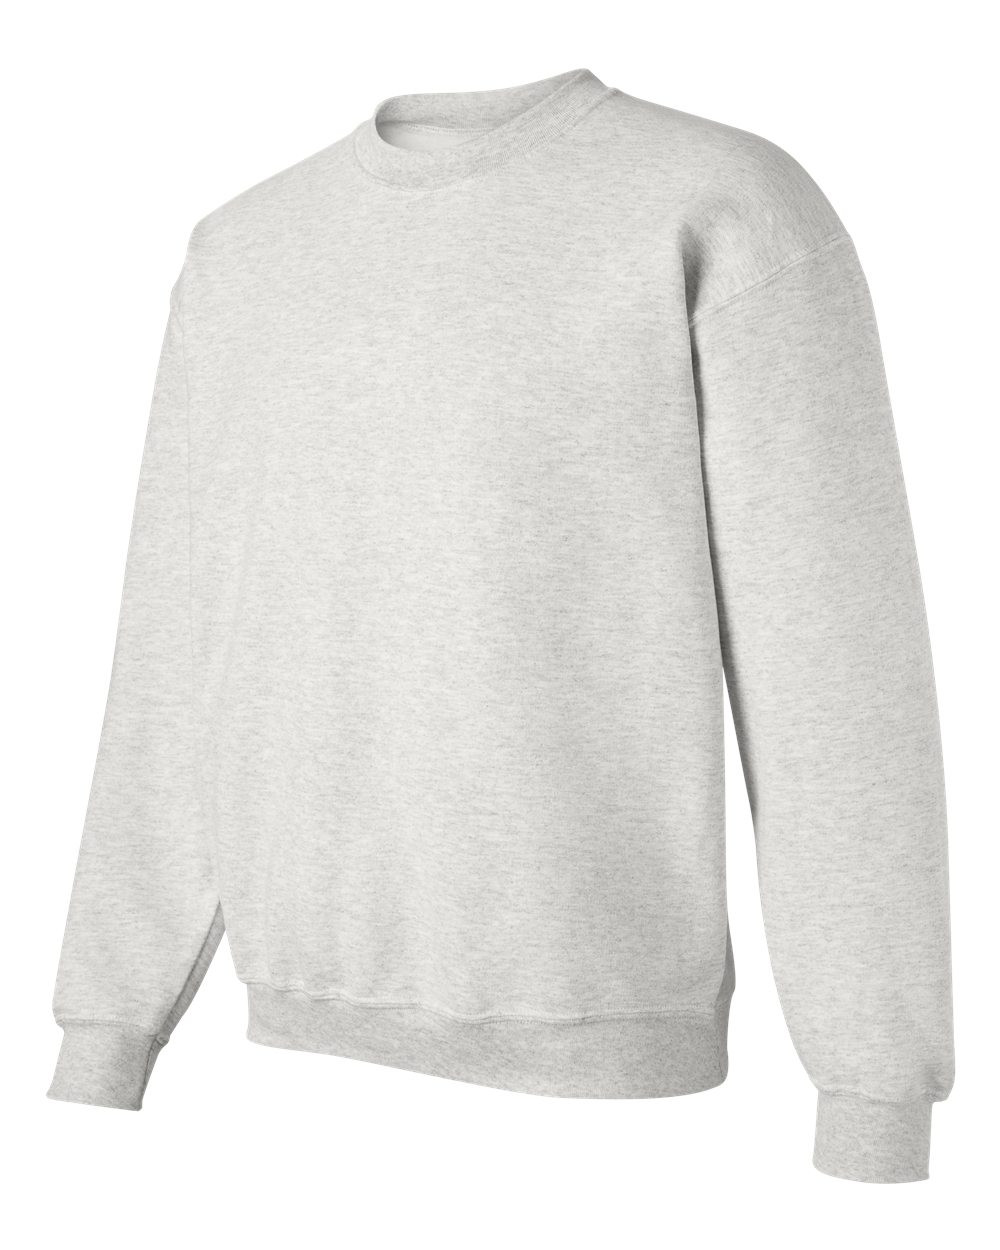 Gildan DryBlend® Crewneck Sweatshirt - image 2 of 5